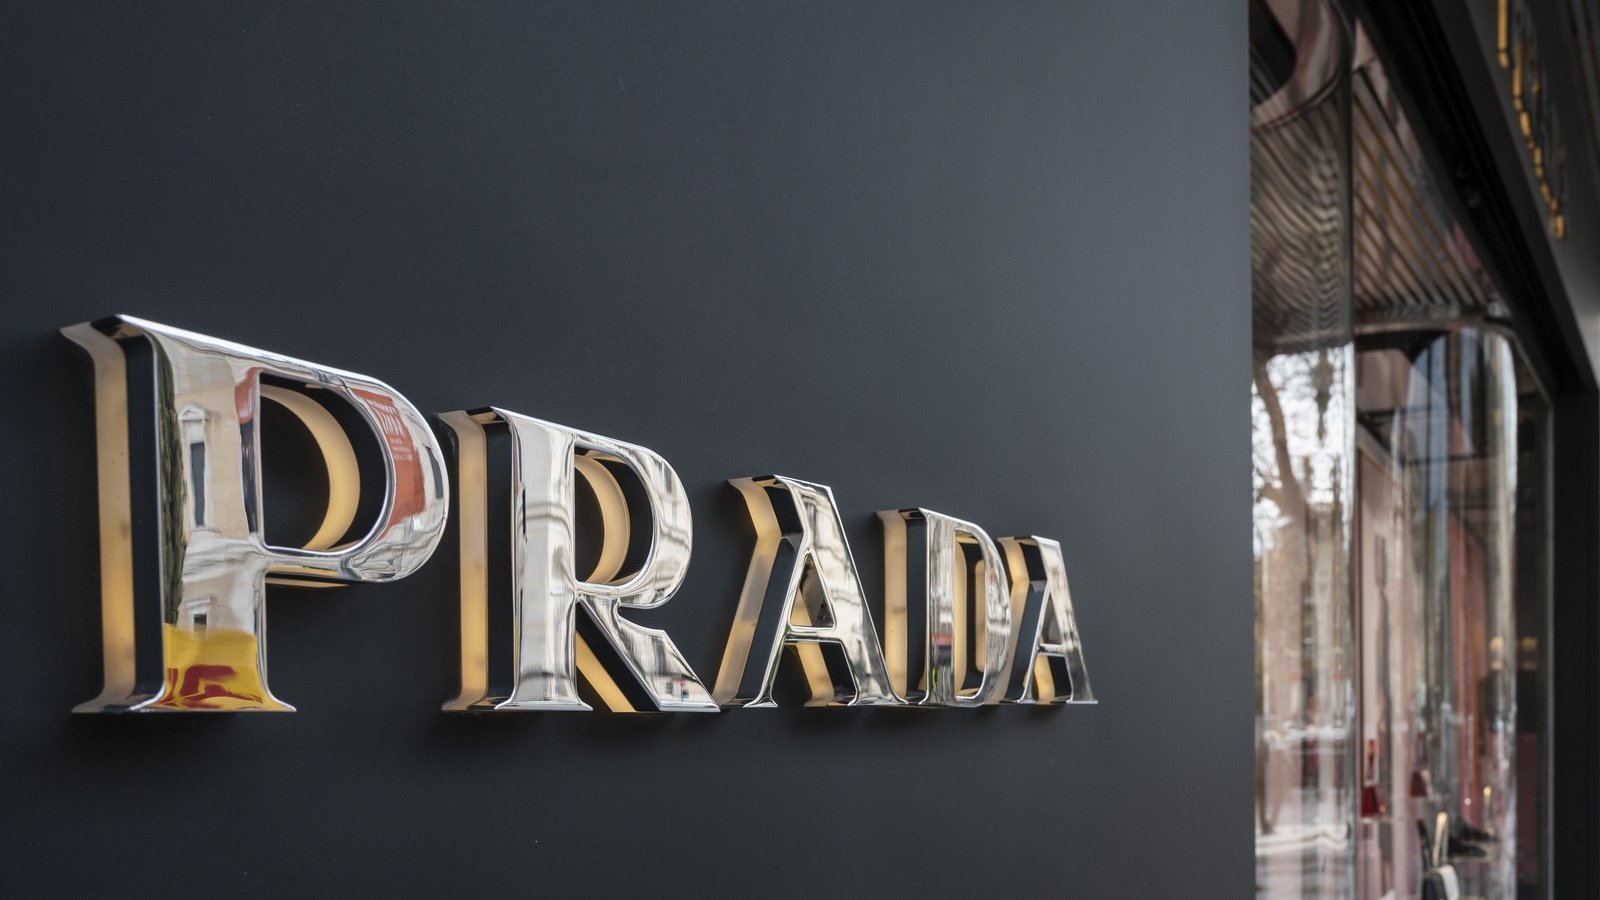 Prada revenues rise despite struggles in Americas